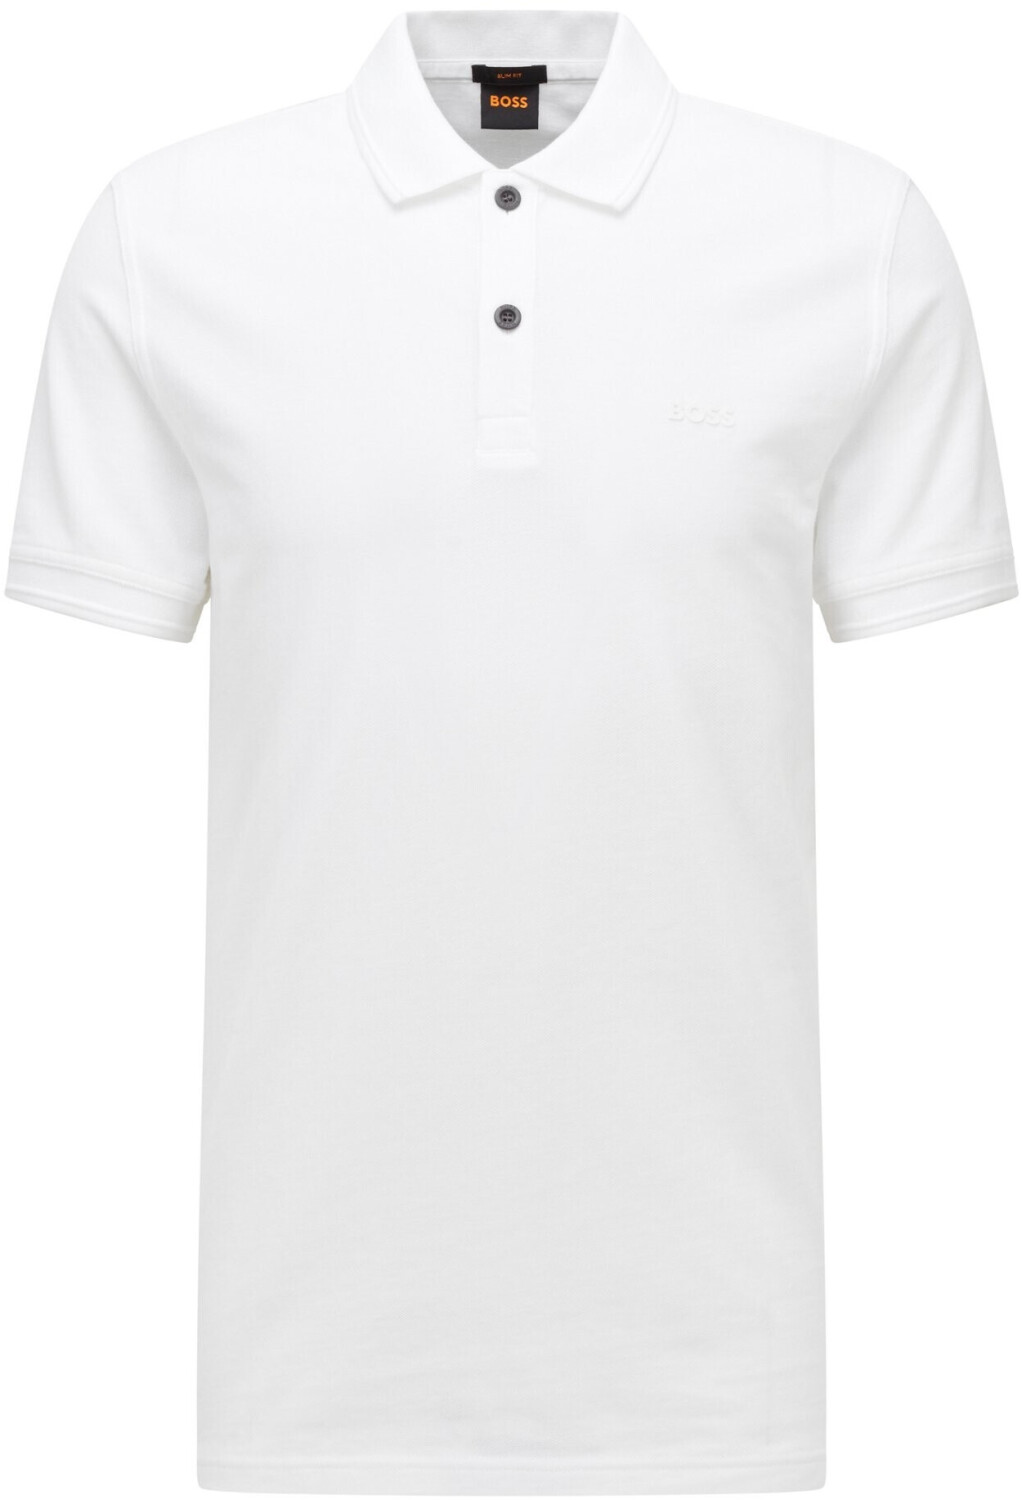 Hugo Boss | € Prime 48,00 (50468576-100) bei Slim-Fit white Poloshirt ab Preisvergleich